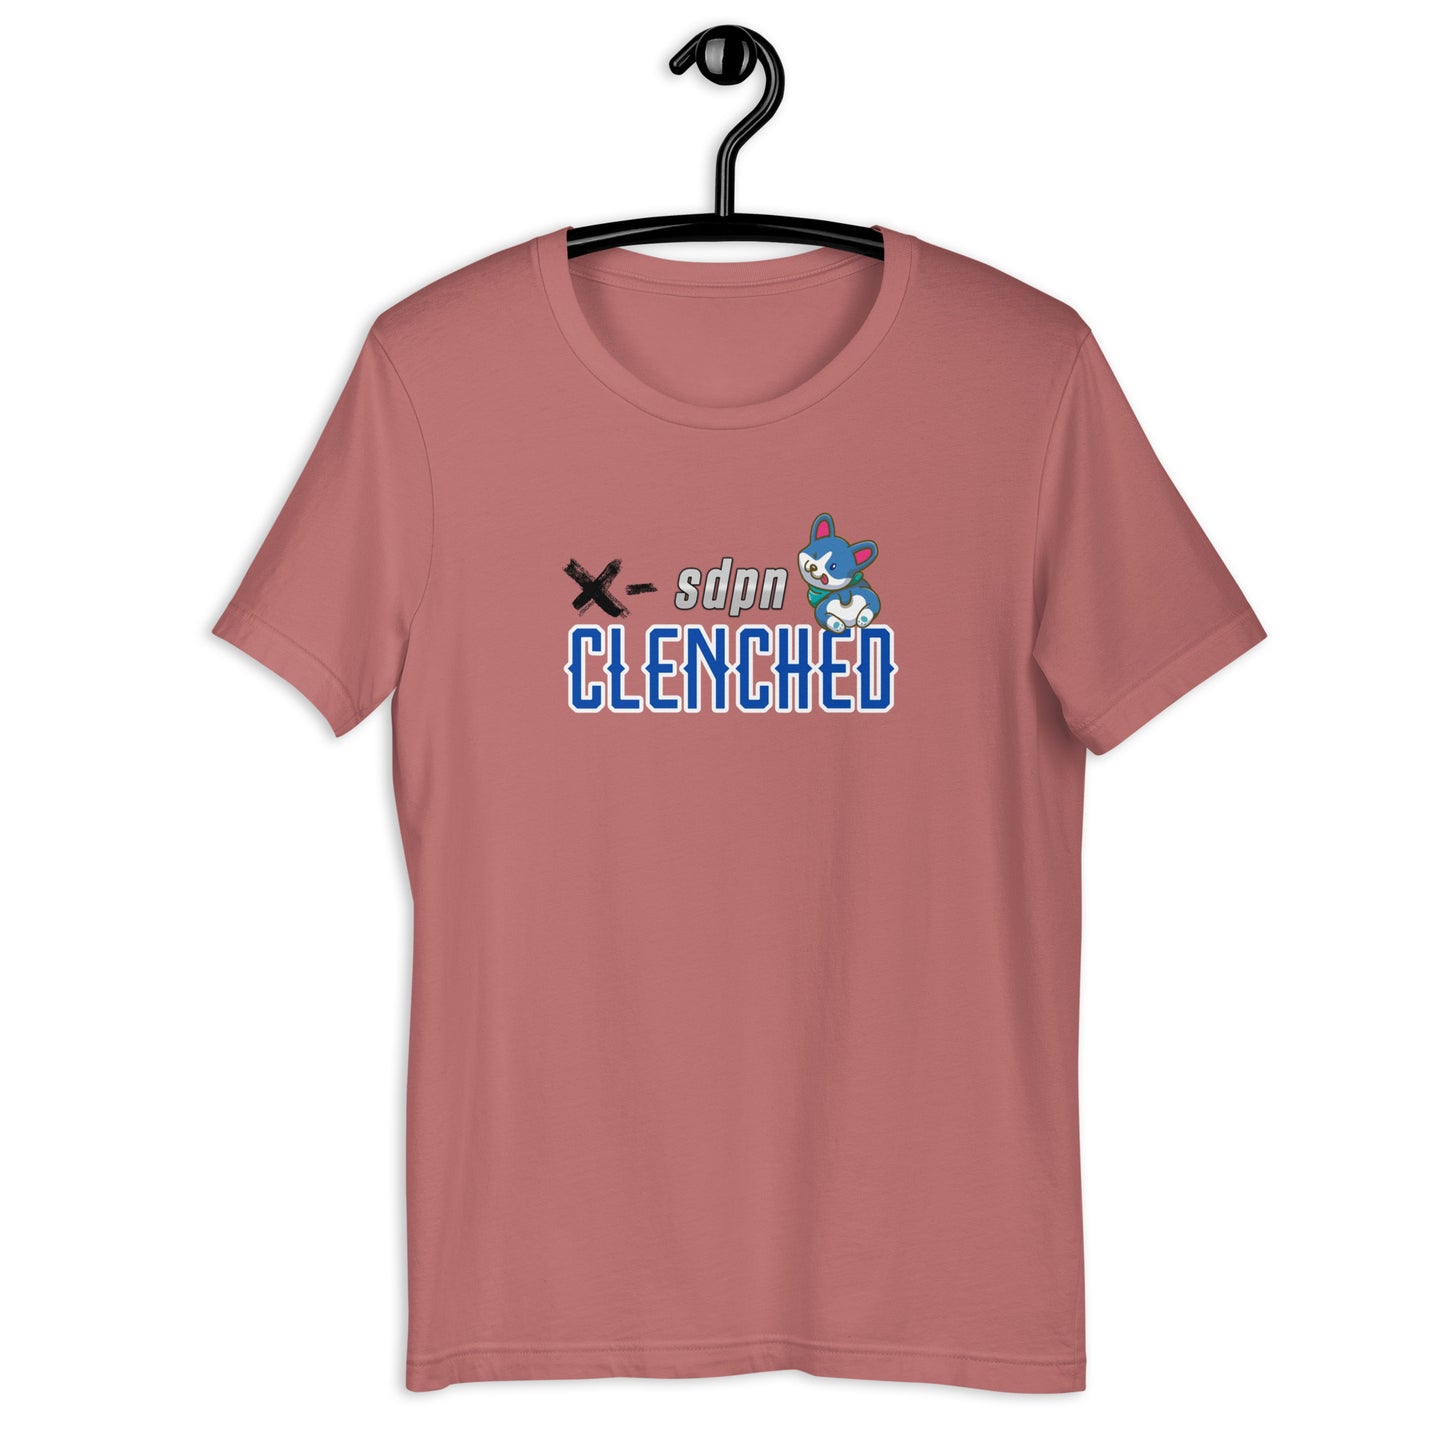 Clenched Corgi T-shirt